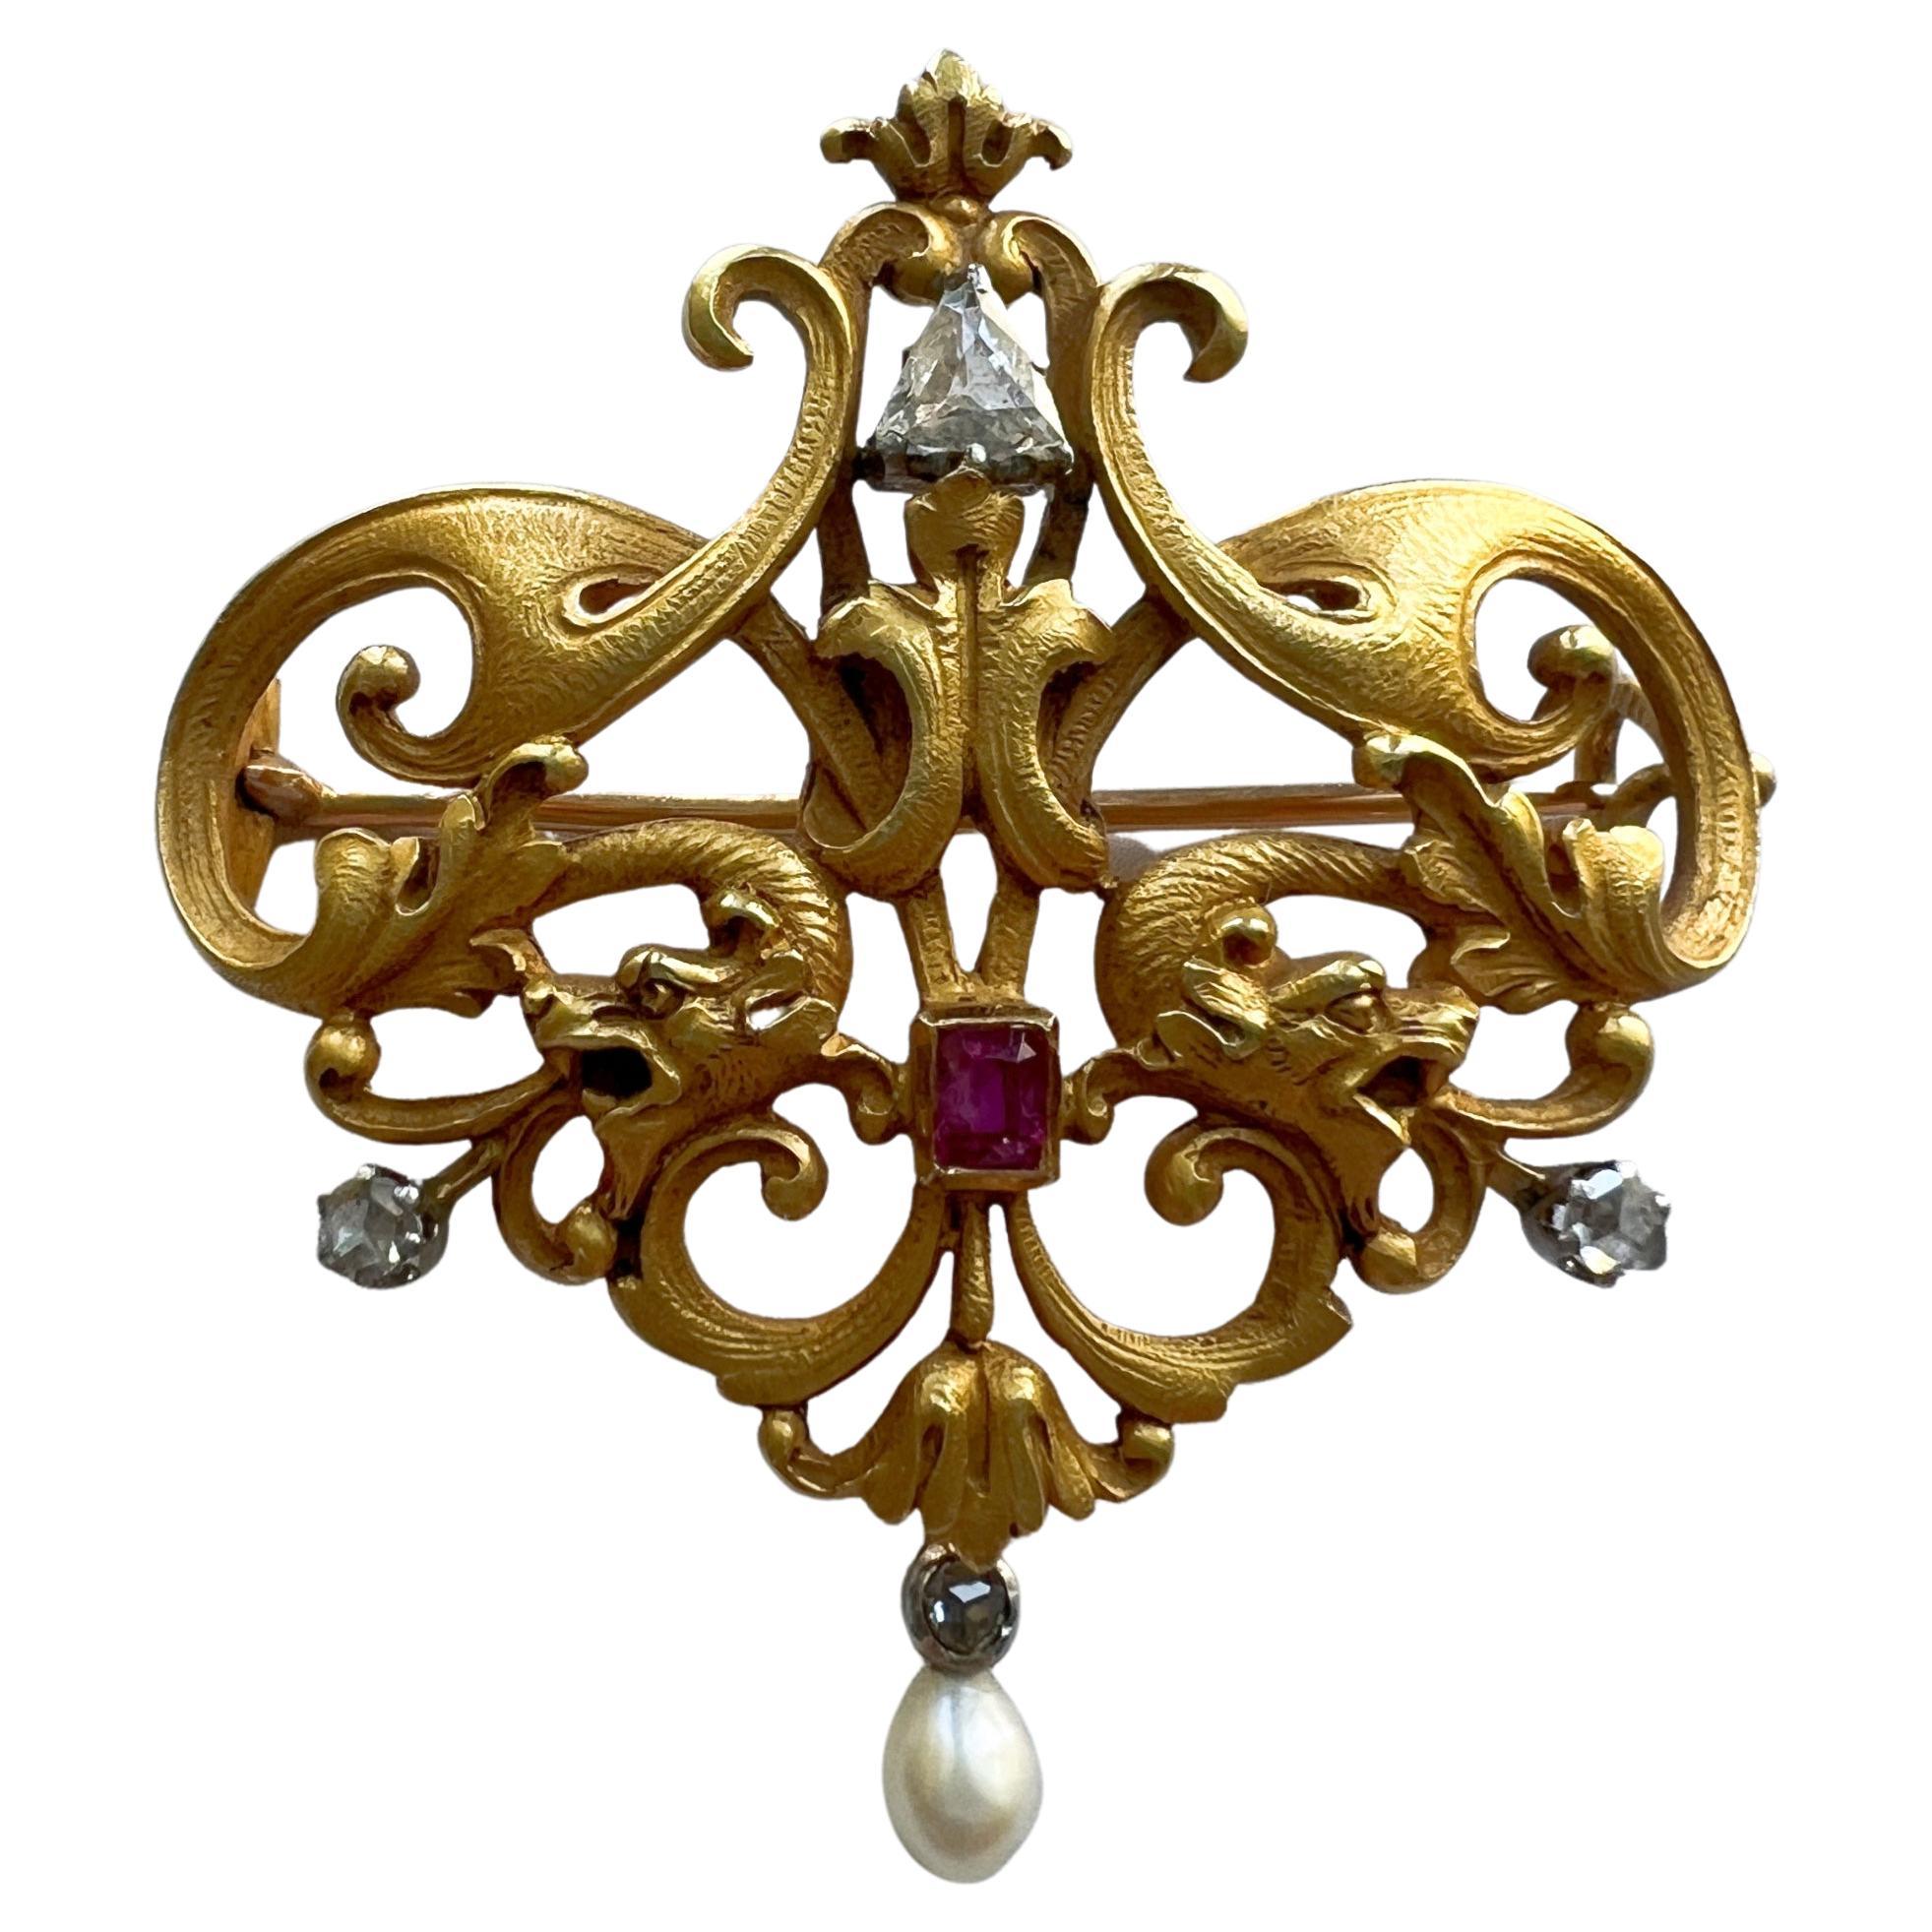 Art Nouveau French 18K gold double chimera griffon dragon pendant brooch